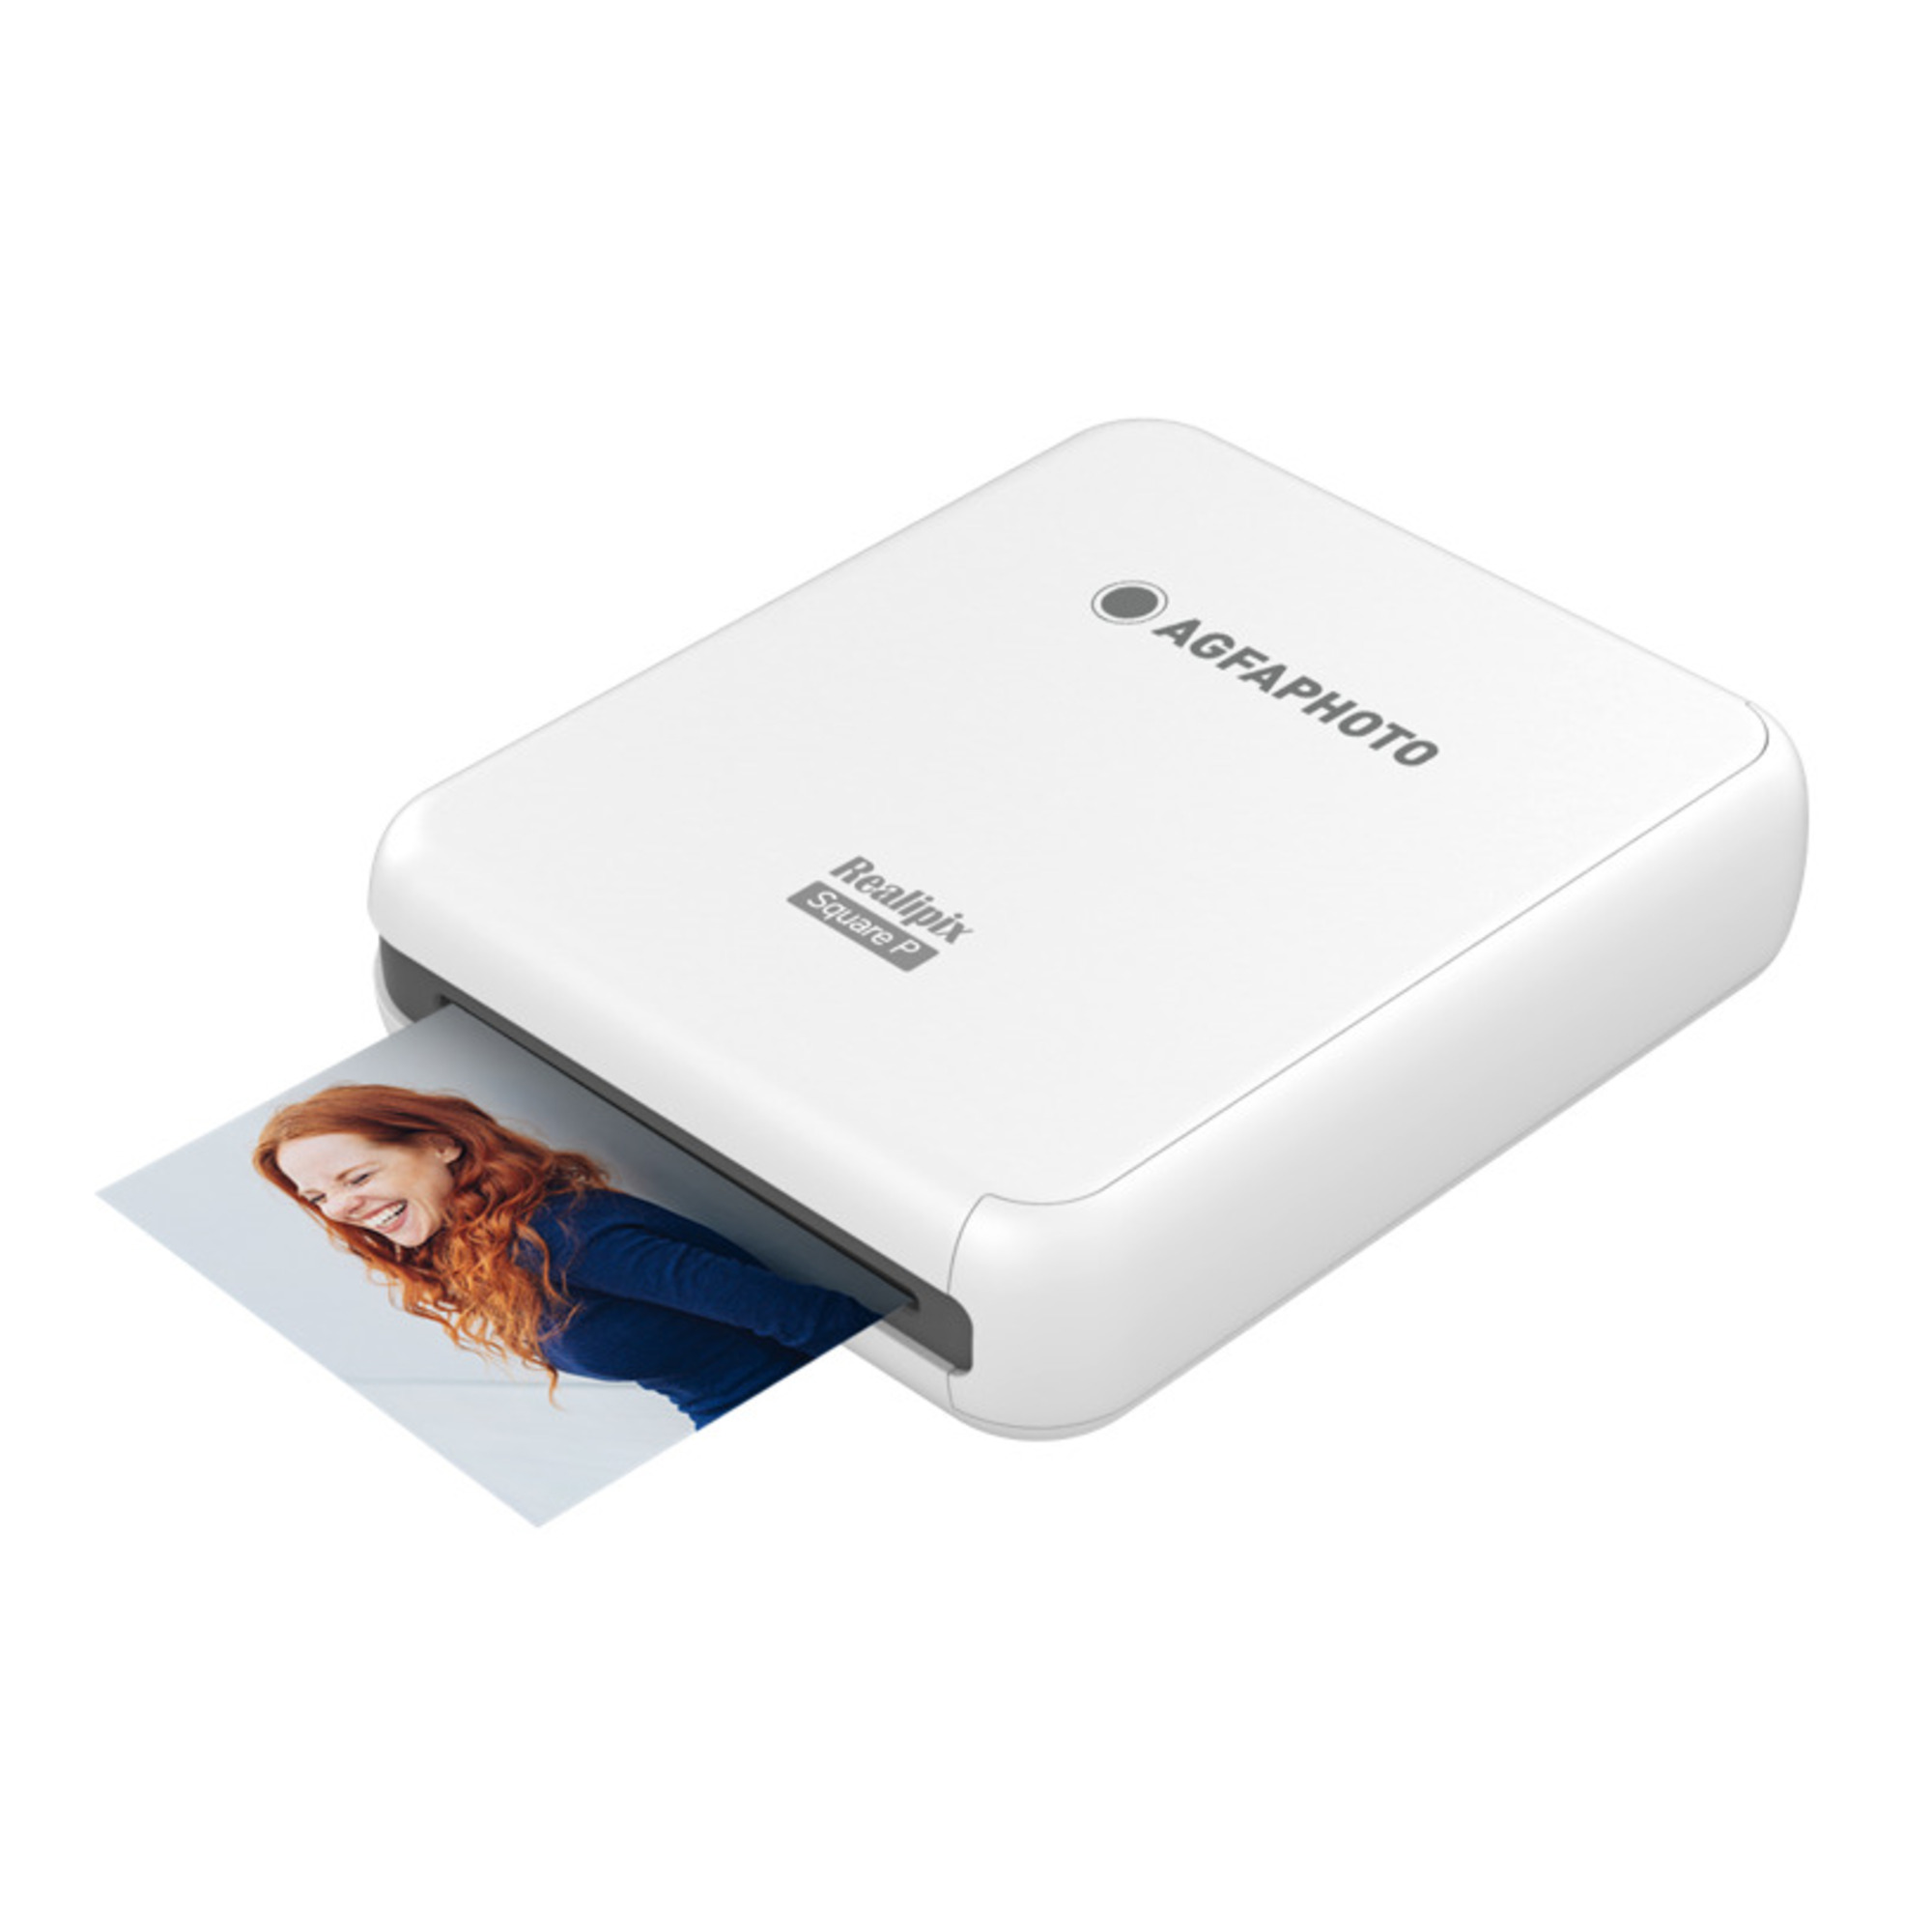 AGFA PHOTO - Realipix Square P - Imprimante Photo via Bluetooth - Sublimation Thermique 4Pass - Blanc - Neuf